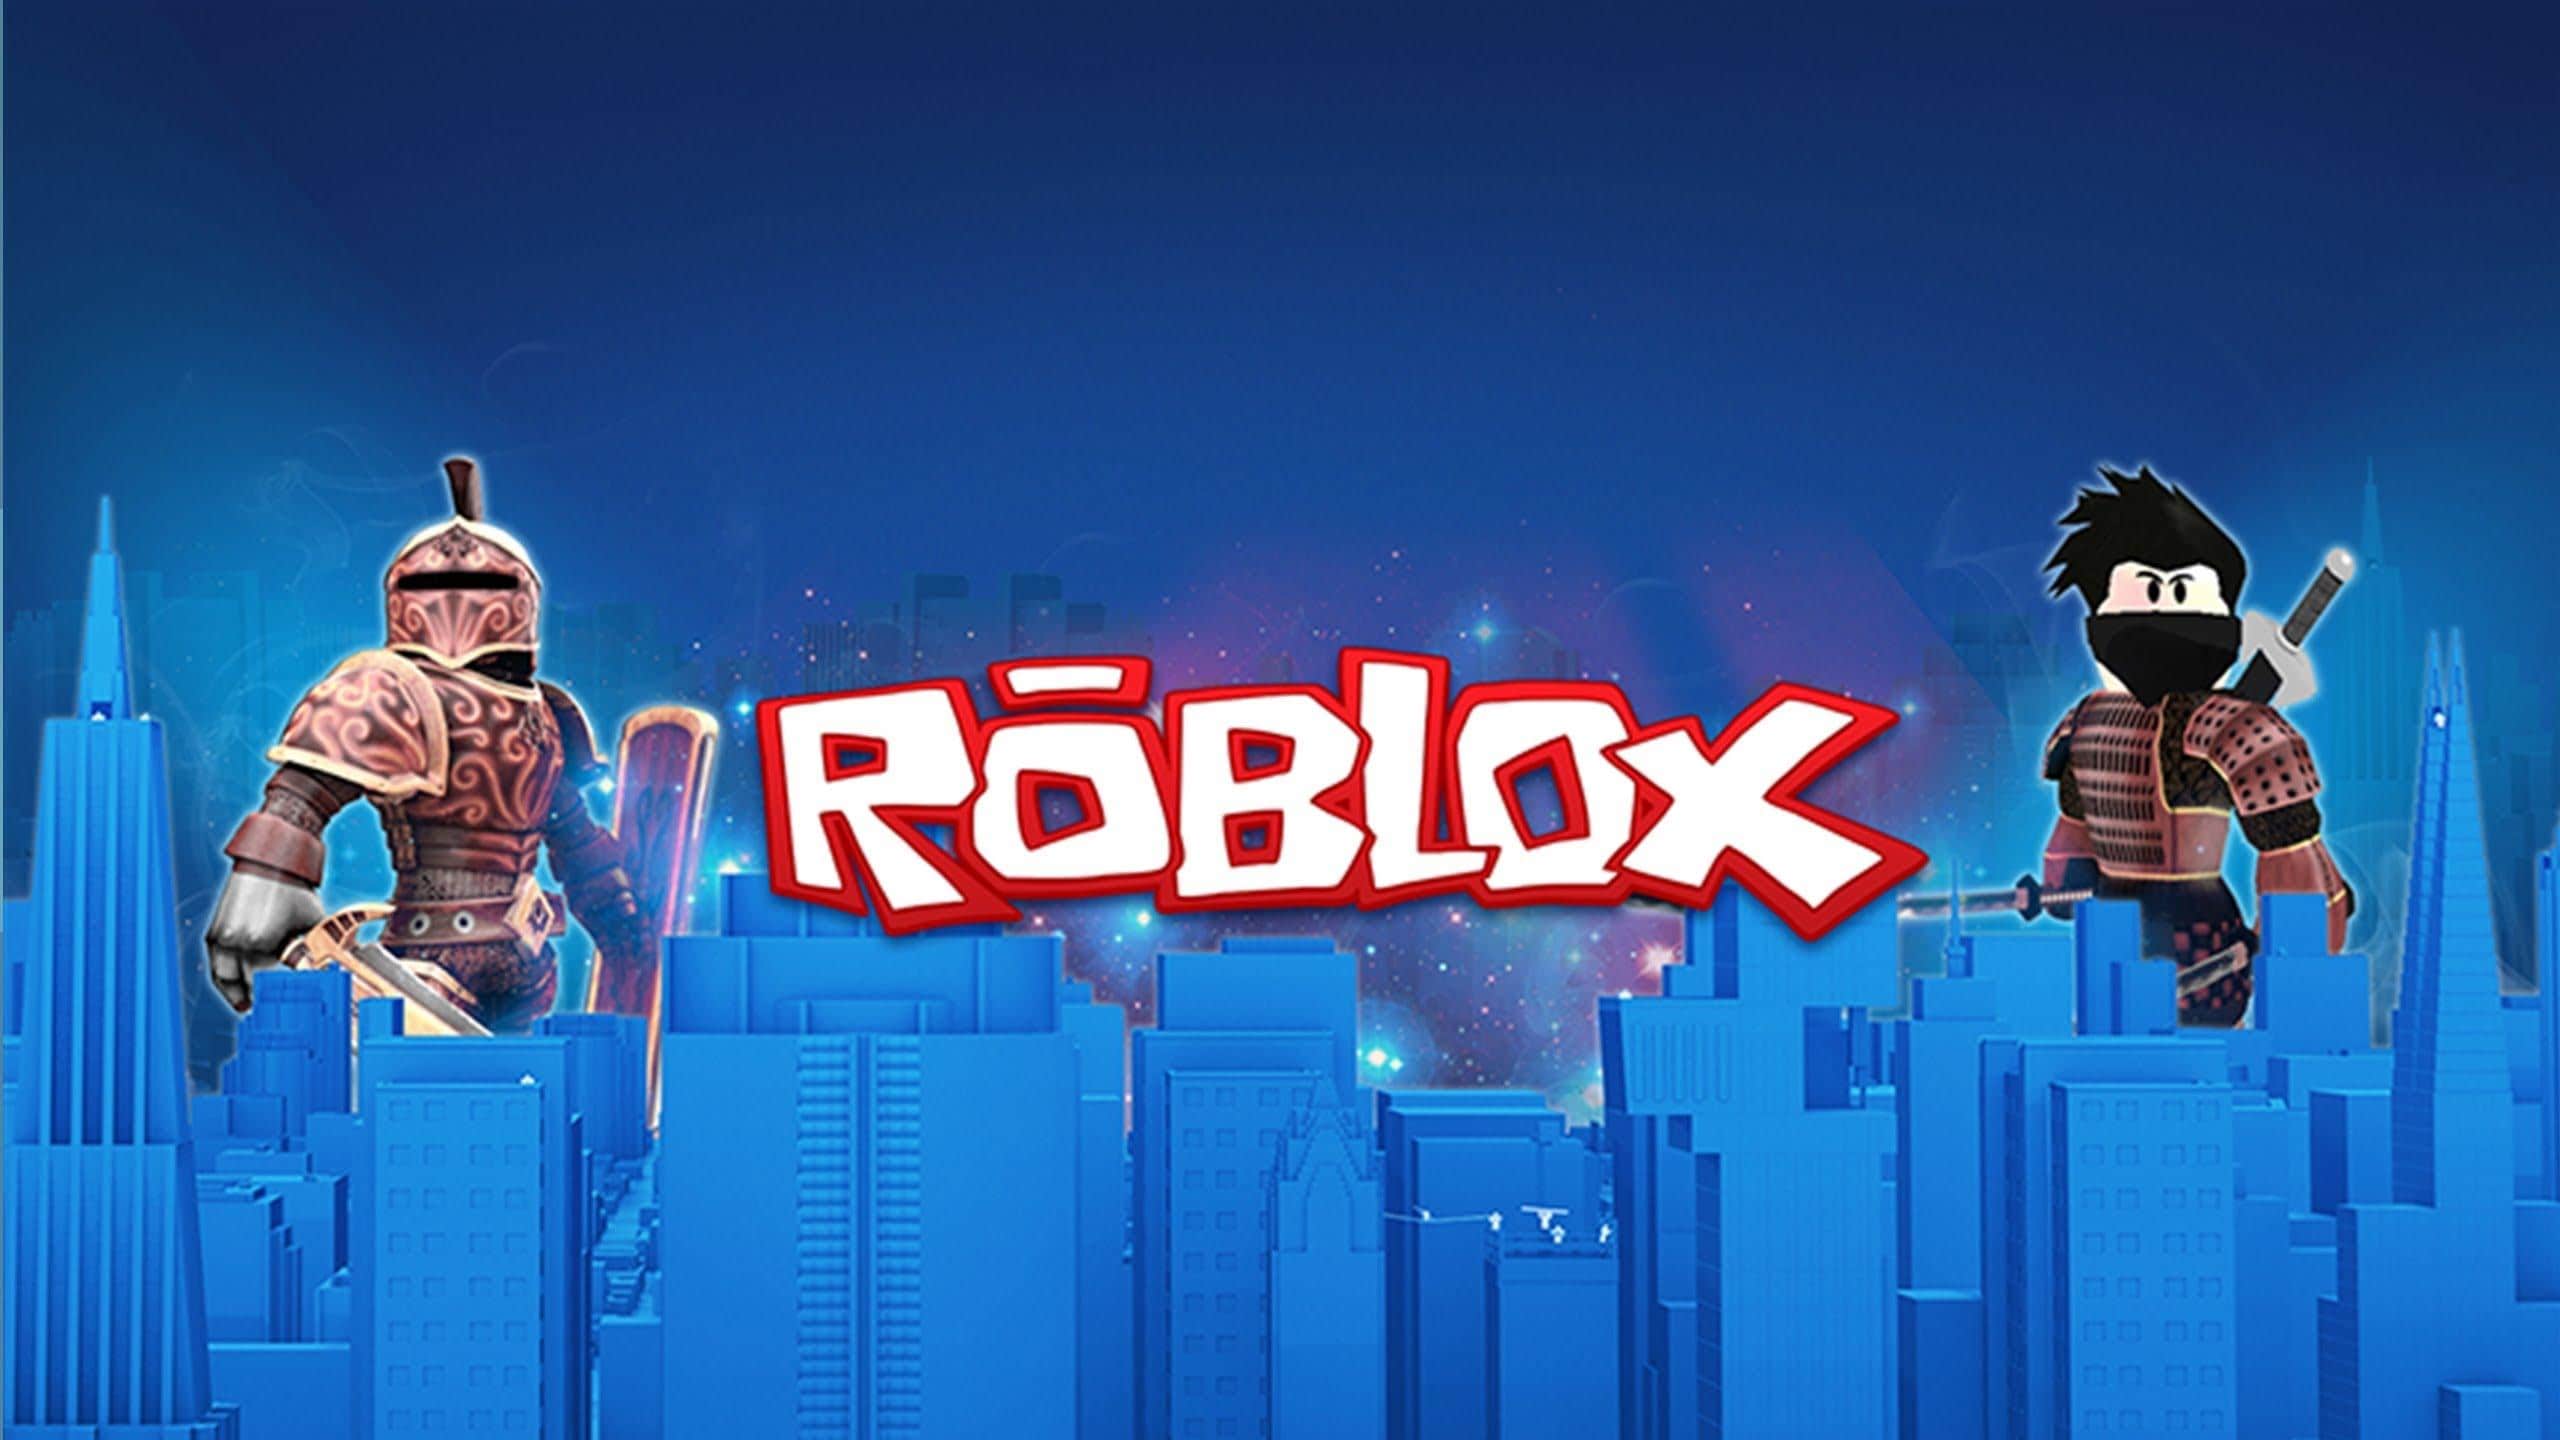 Roblox Hd Wallpaper Roblox Logo 12125 Hd Wallpaper Backgrounds Download - wallpaper of roblox logo